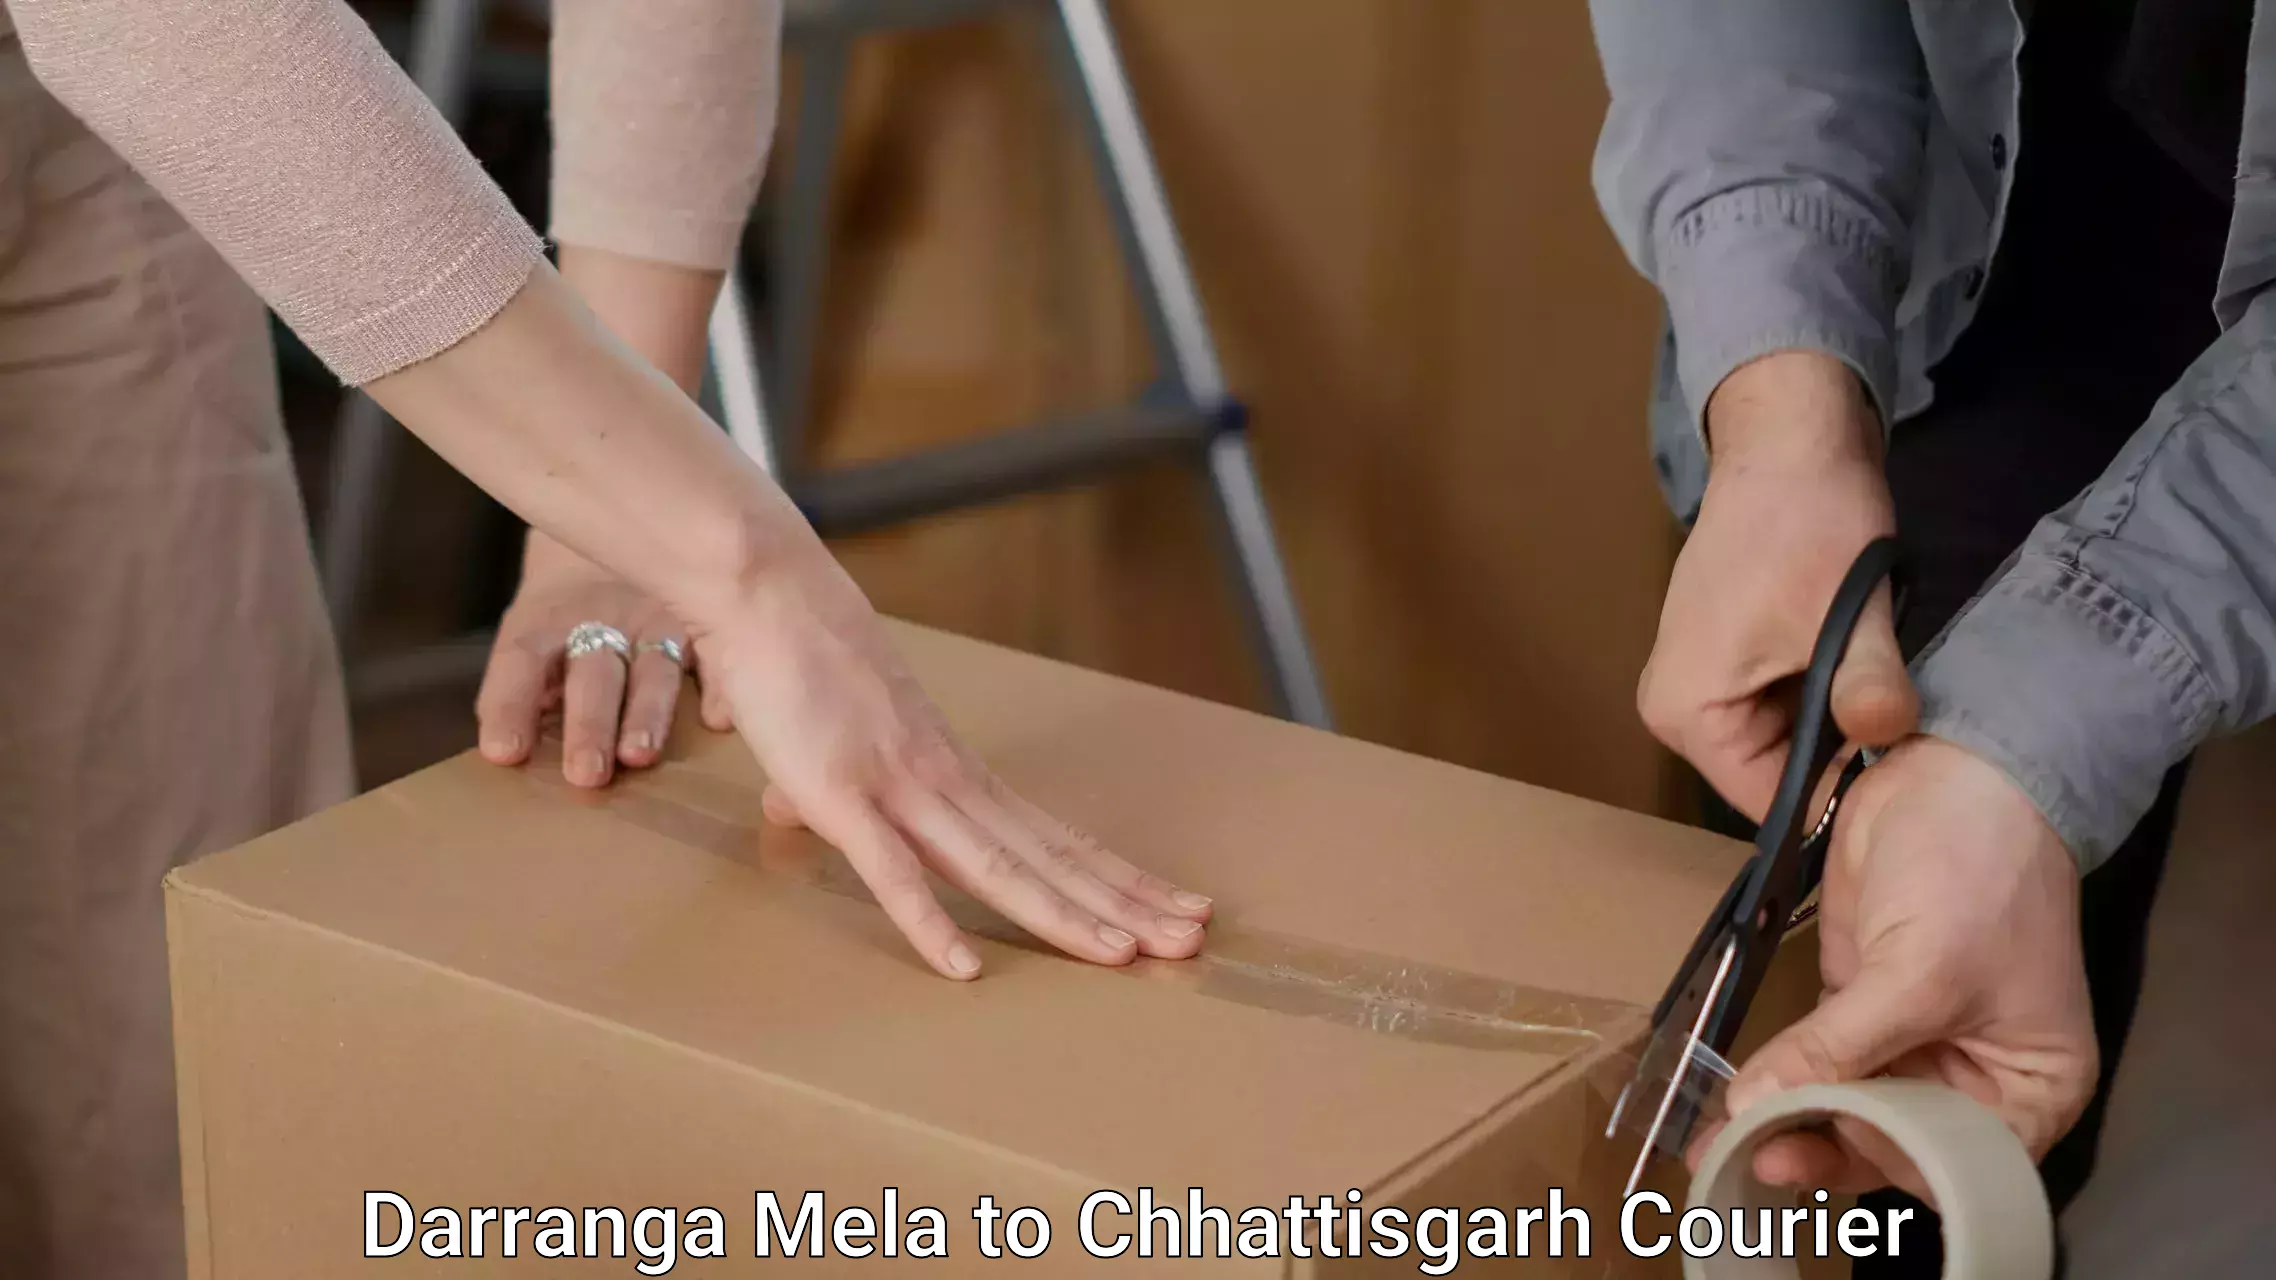 Specialized moving company Darranga Mela to Chhattisgarh